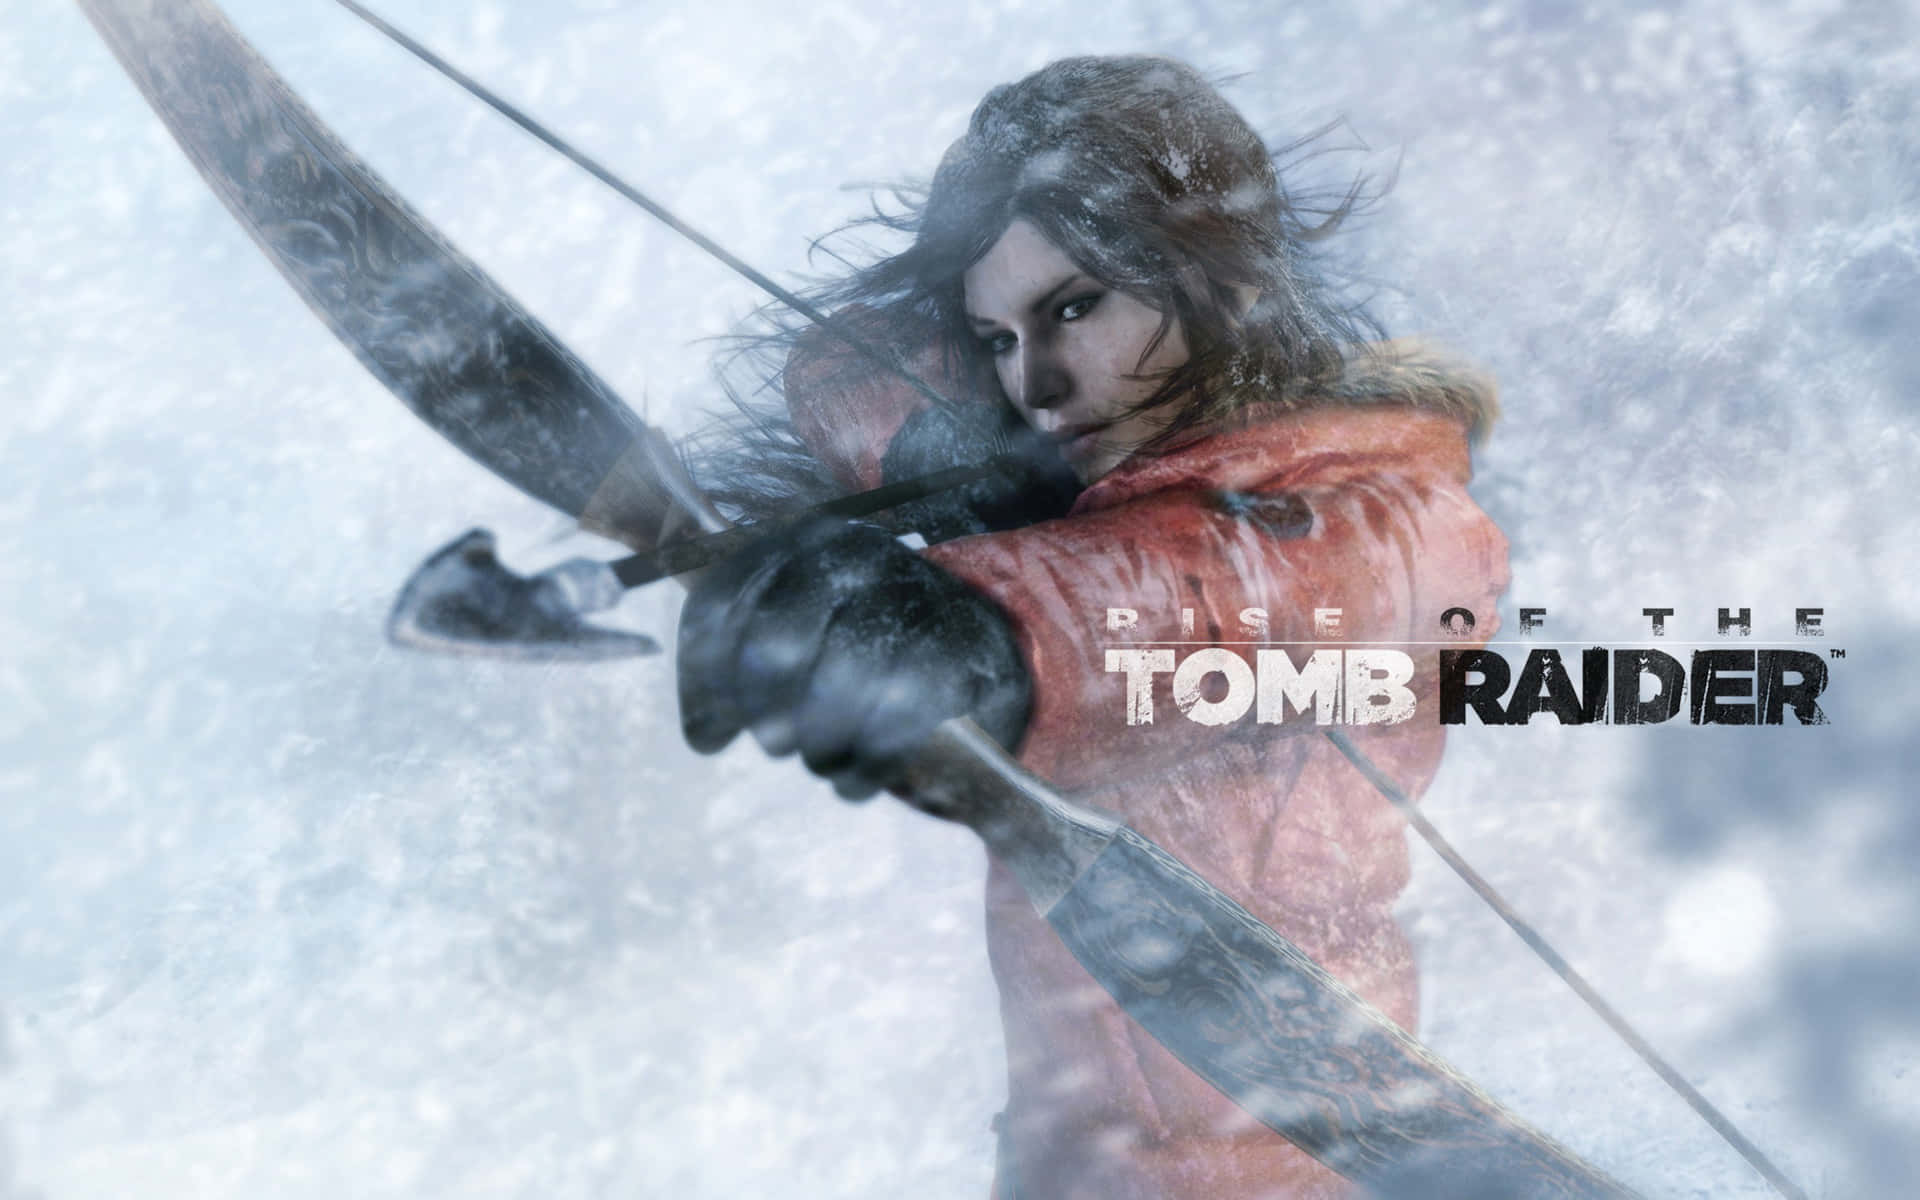 Riseof The Tomb Raider - Trods Store Udfordringer.